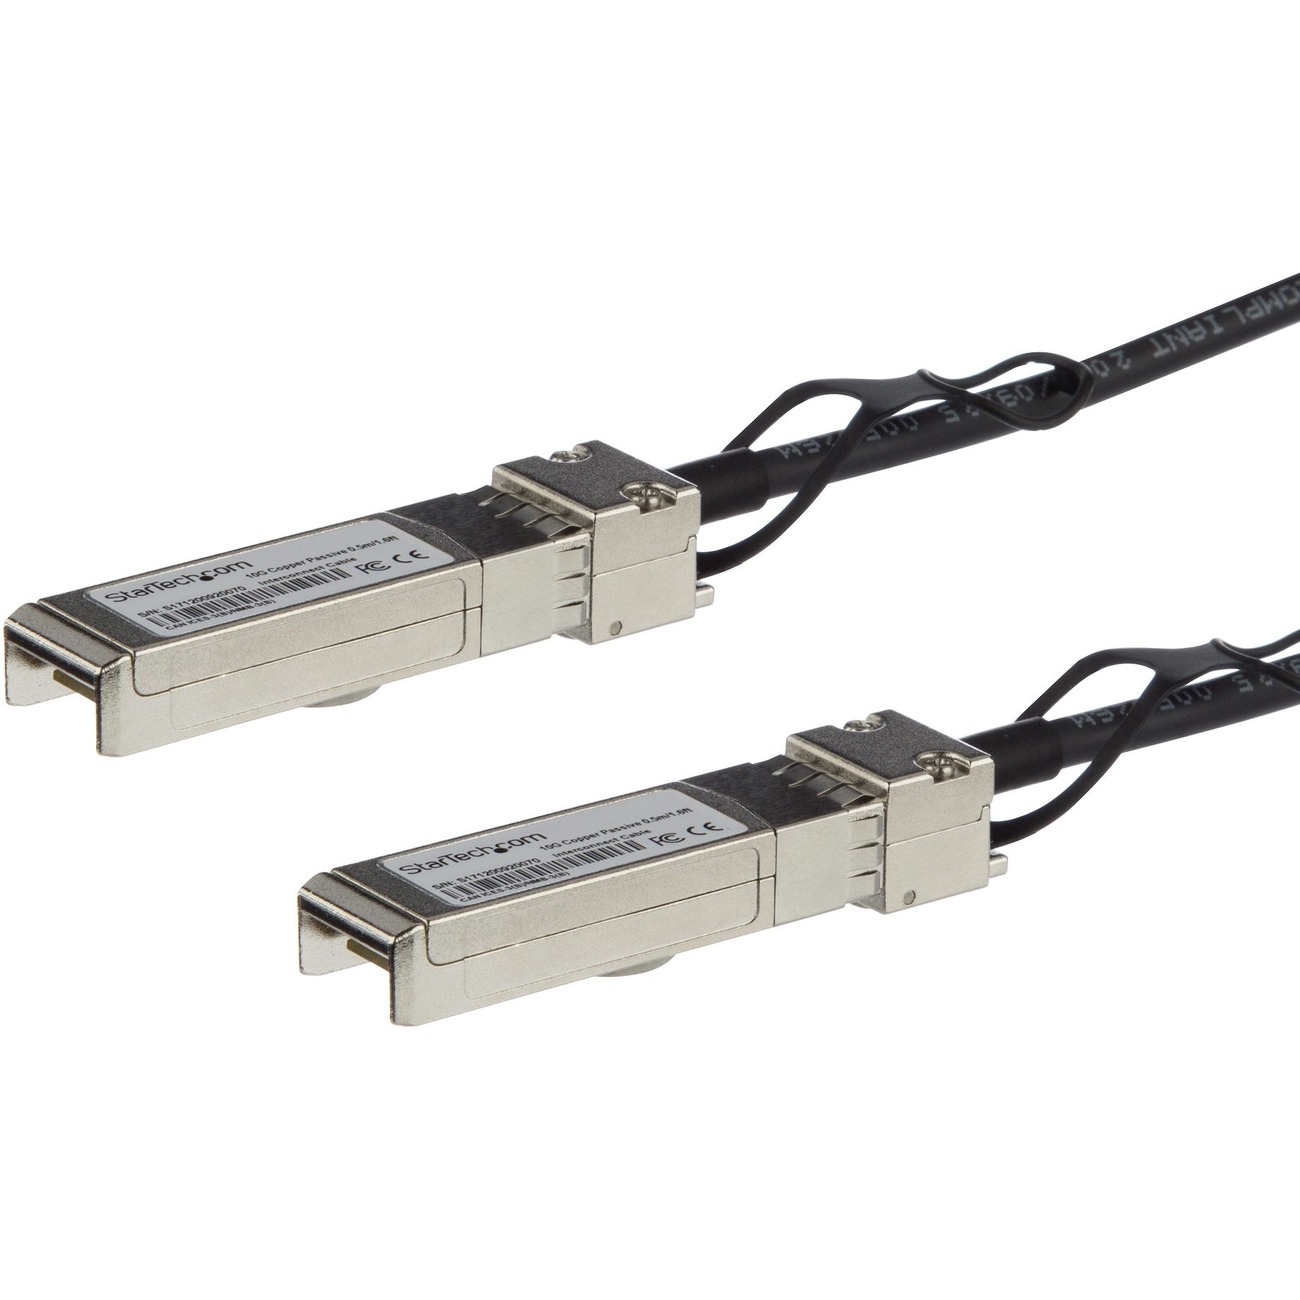 2.5m 10G SFP+ to SFP+ Direct Attach Cable for Cisco SFP-H10GB-CU2-5M  10GbE SFP+ Copper DAC 10Gbps Passive Twinax 100% Cisco SFP-H10GB-CU2-5M  Compatible 2.5m 10G direct attach cable 10 Gbps Passive Twinax Copper ...